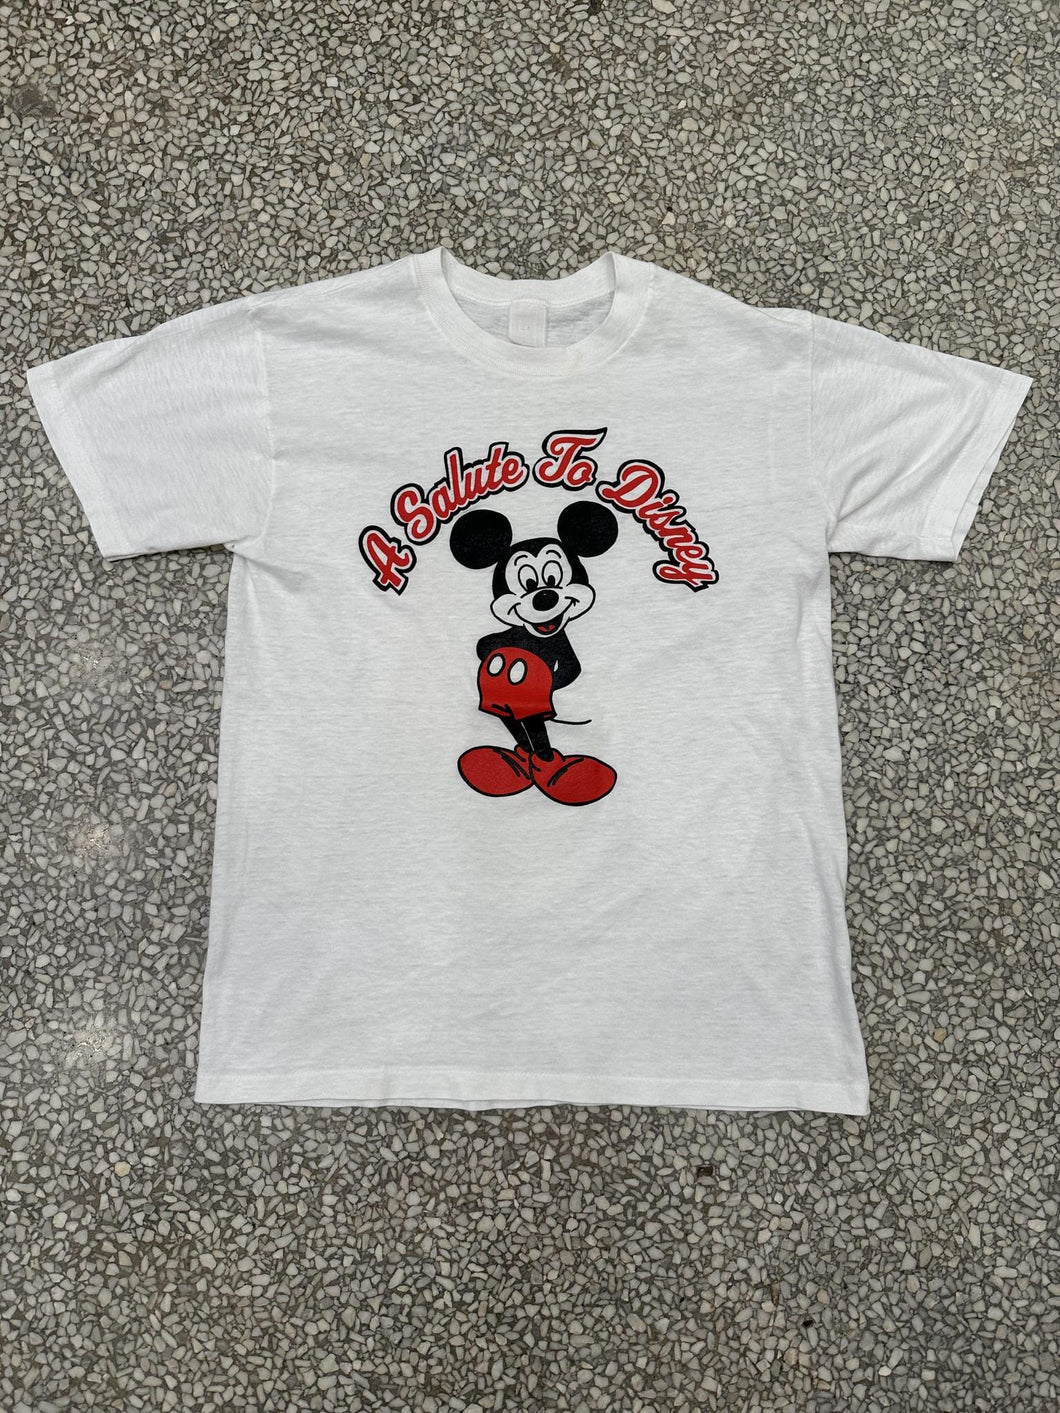 Mickey Mouse Vintage 80s A Salute To Disney Paper Thin White ABC Vintage 